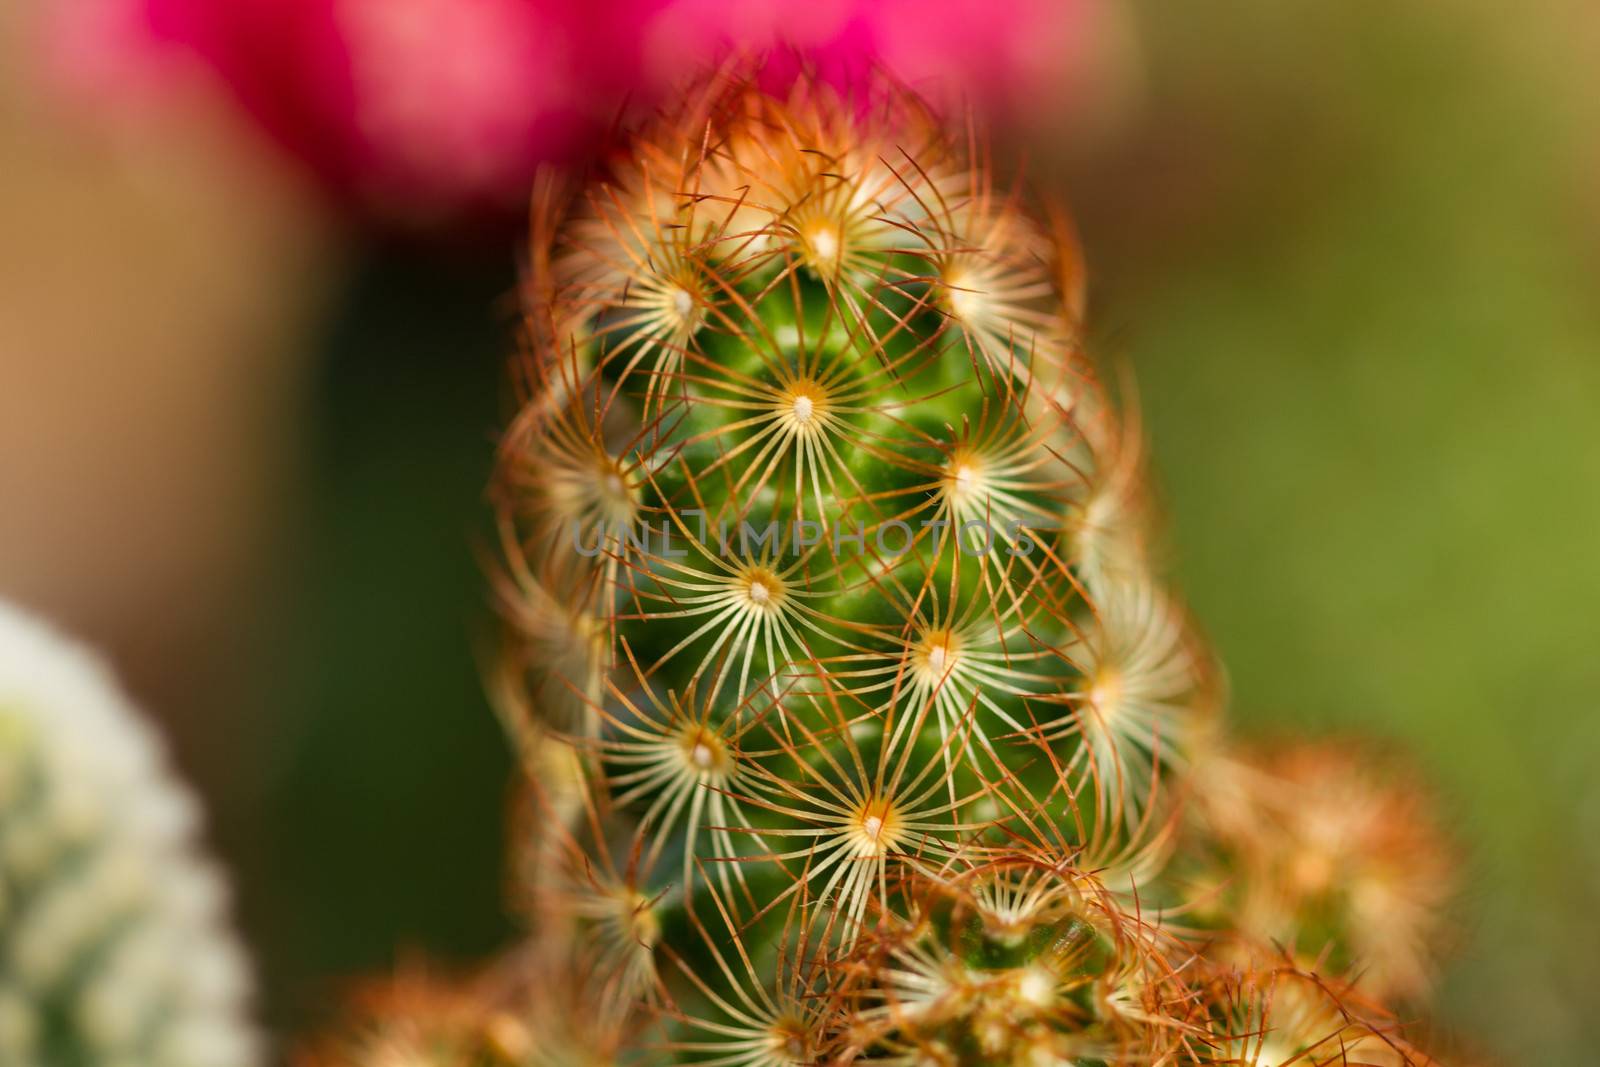 Cactus close up by azamshah72